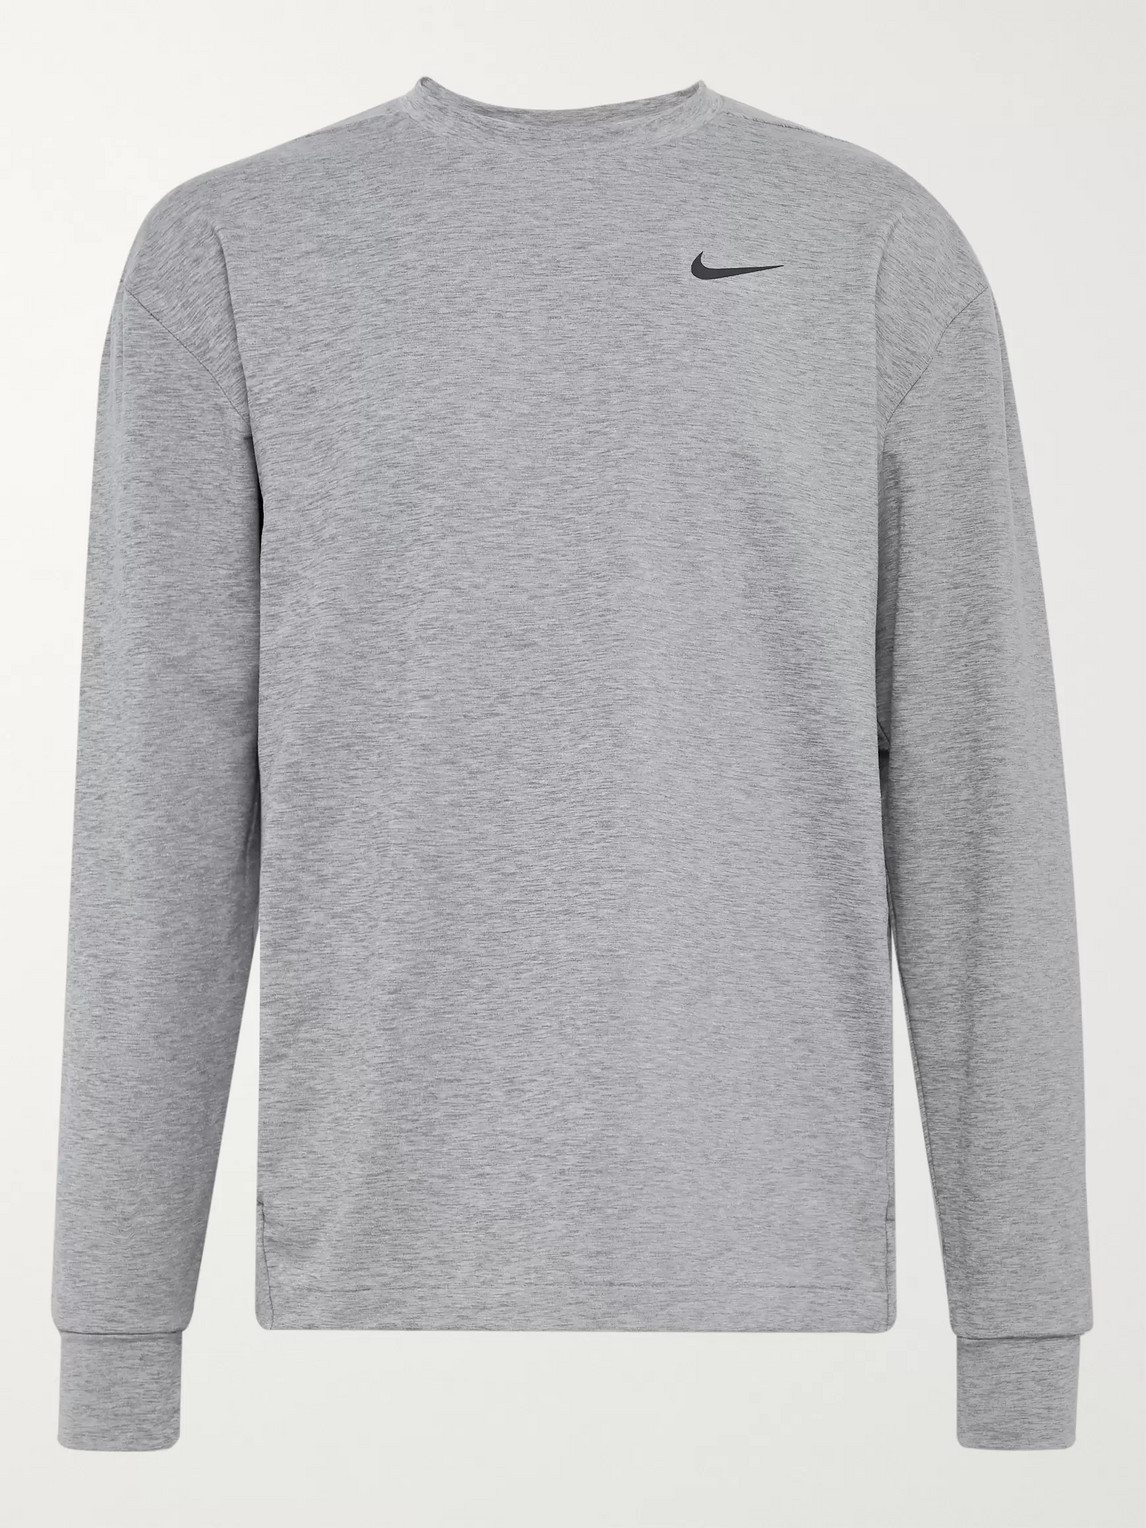 Nike Hyper Dry Dri-fit T-shirt In Grey